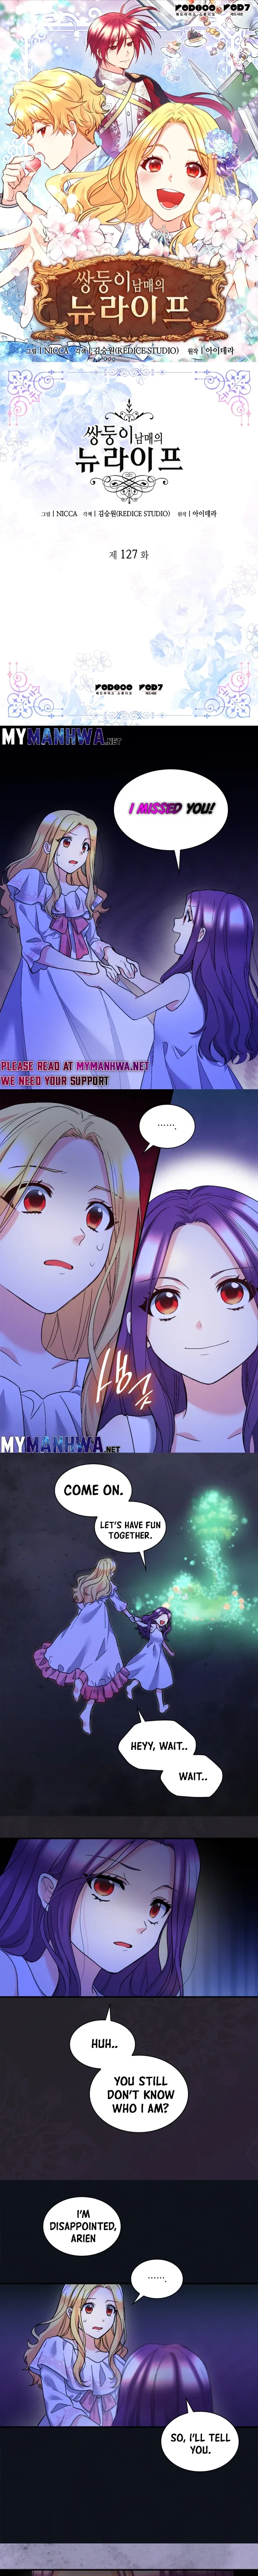 The Twins New Life Manga Twin Siblings' New Life - Chapter 127 - Coffee Manga